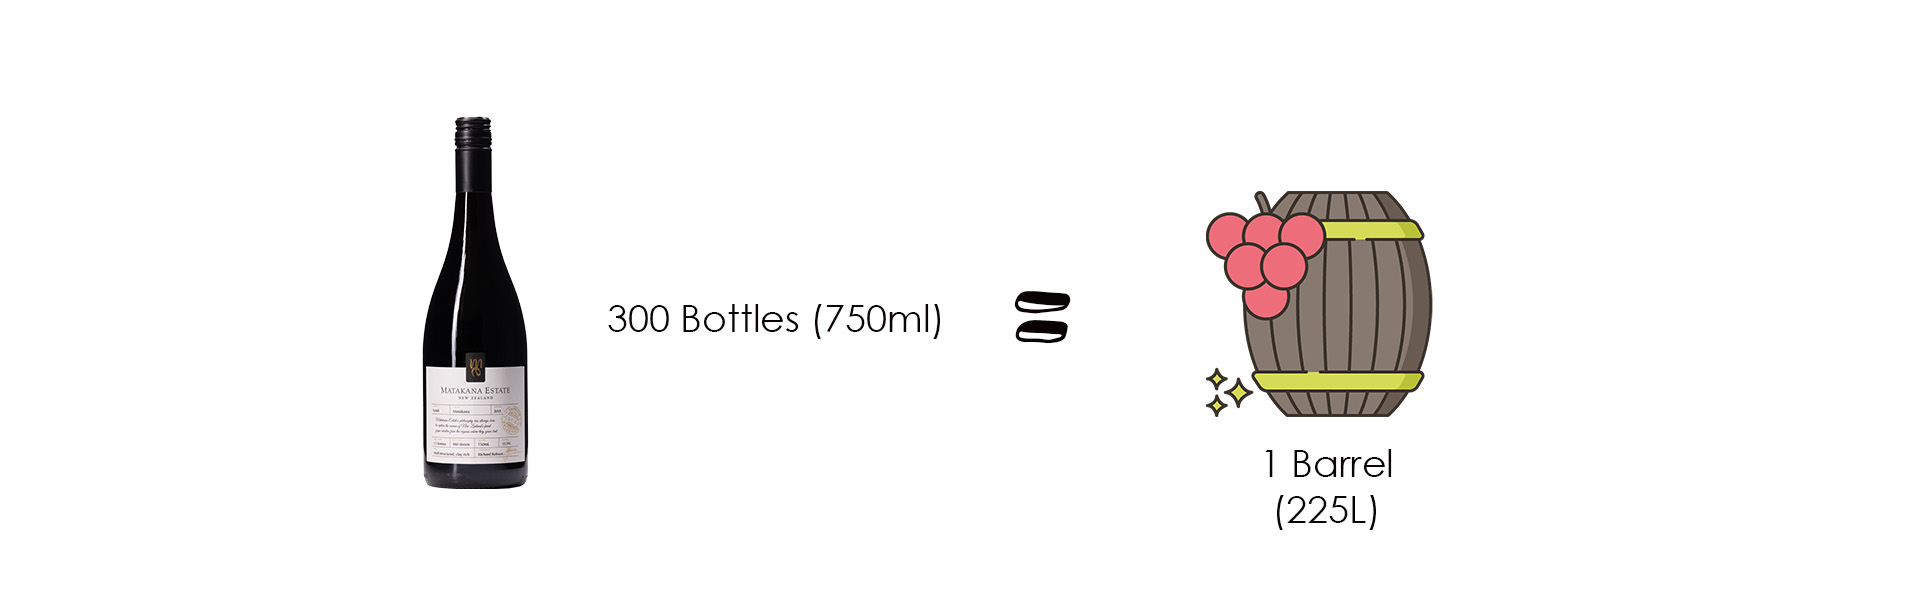 wine-fact-math-barrel